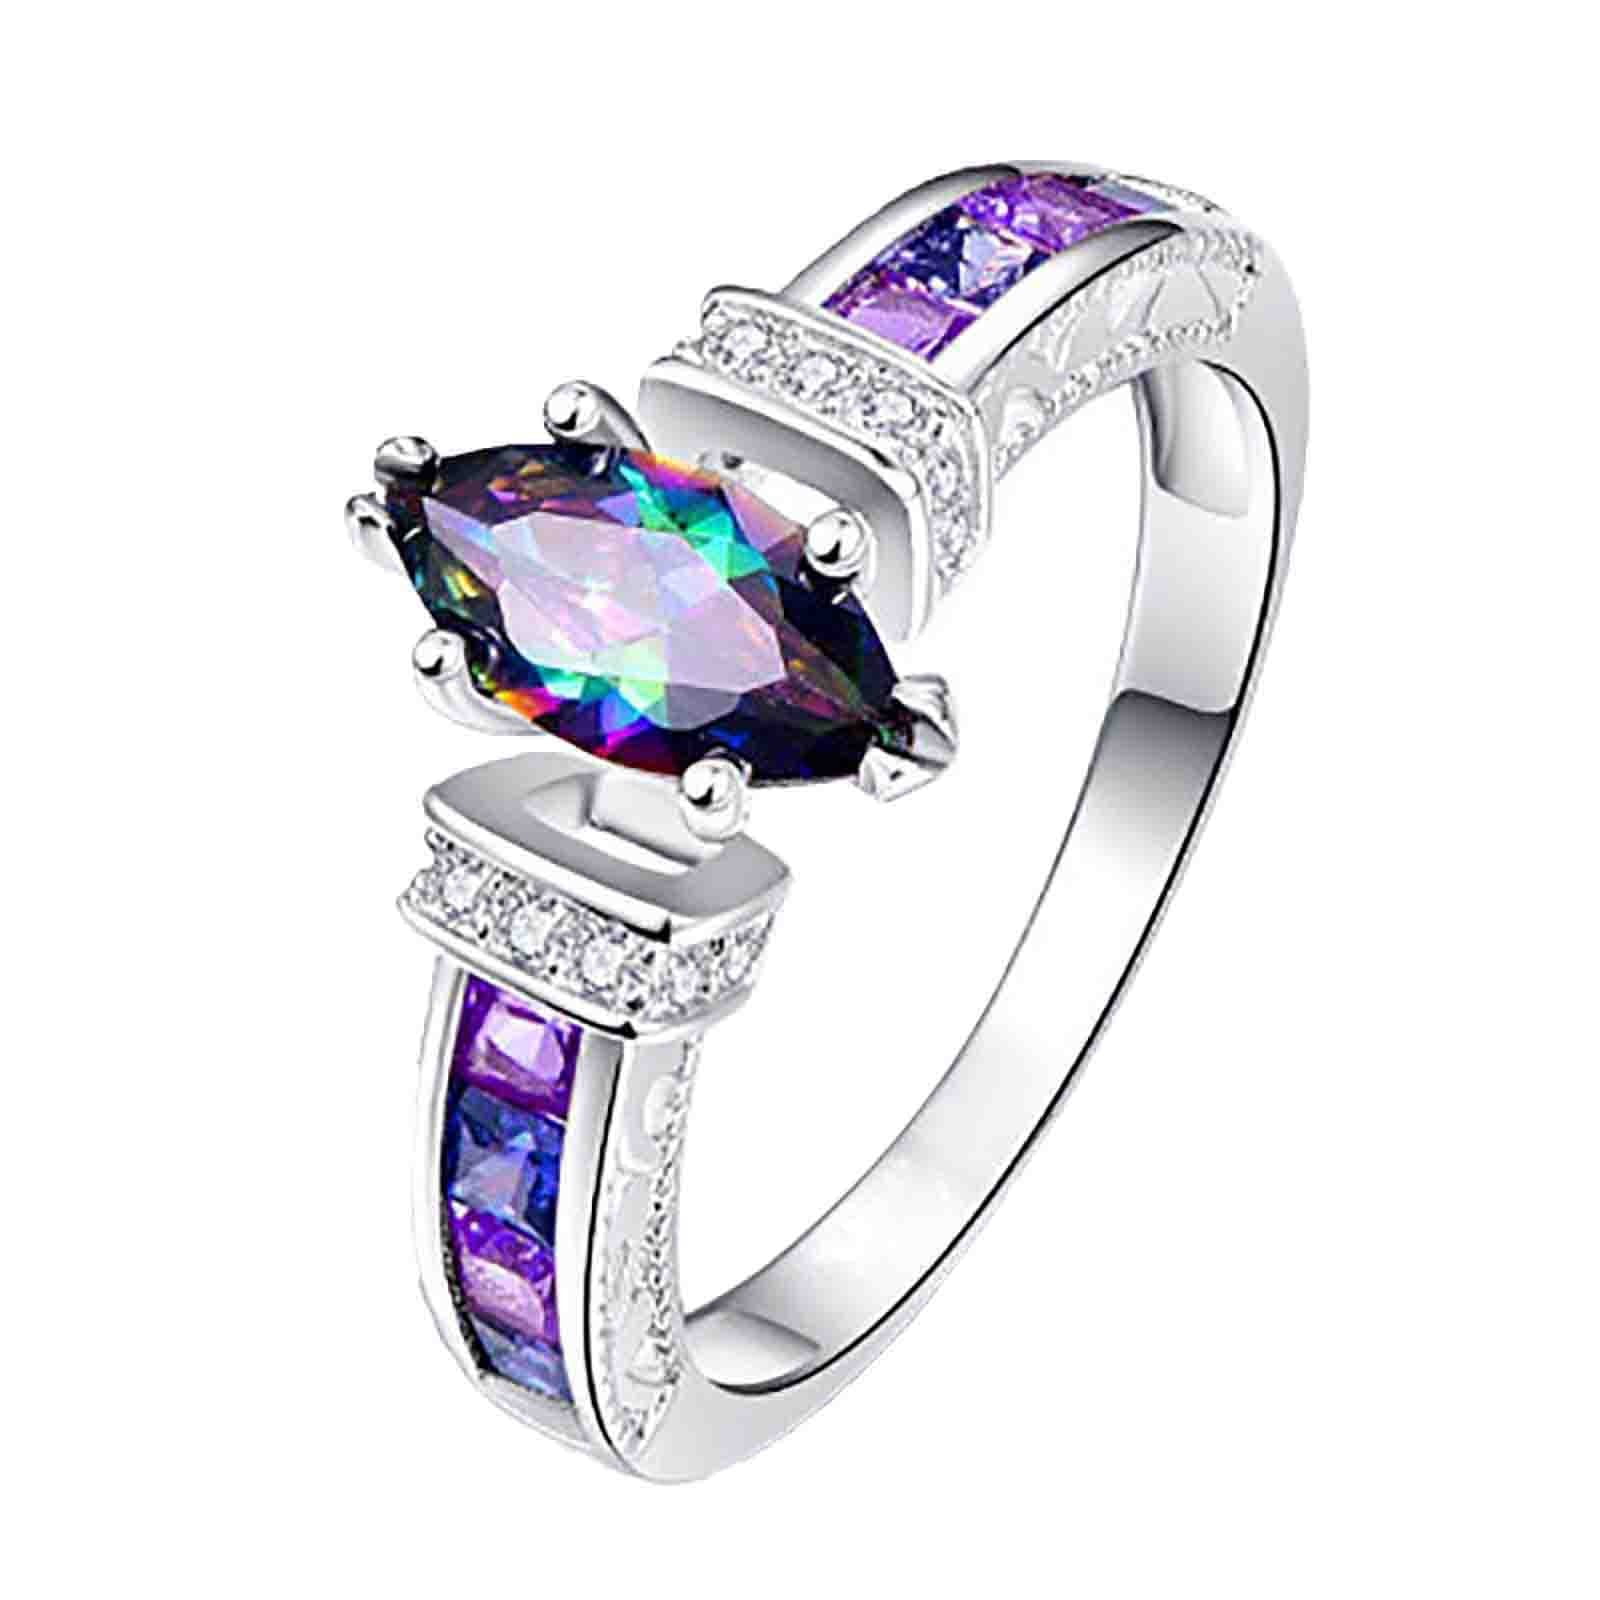 Fashion 925 Silver Blue Sapphire Rings Women Elegant Wedding Jewelry Size 6-10 